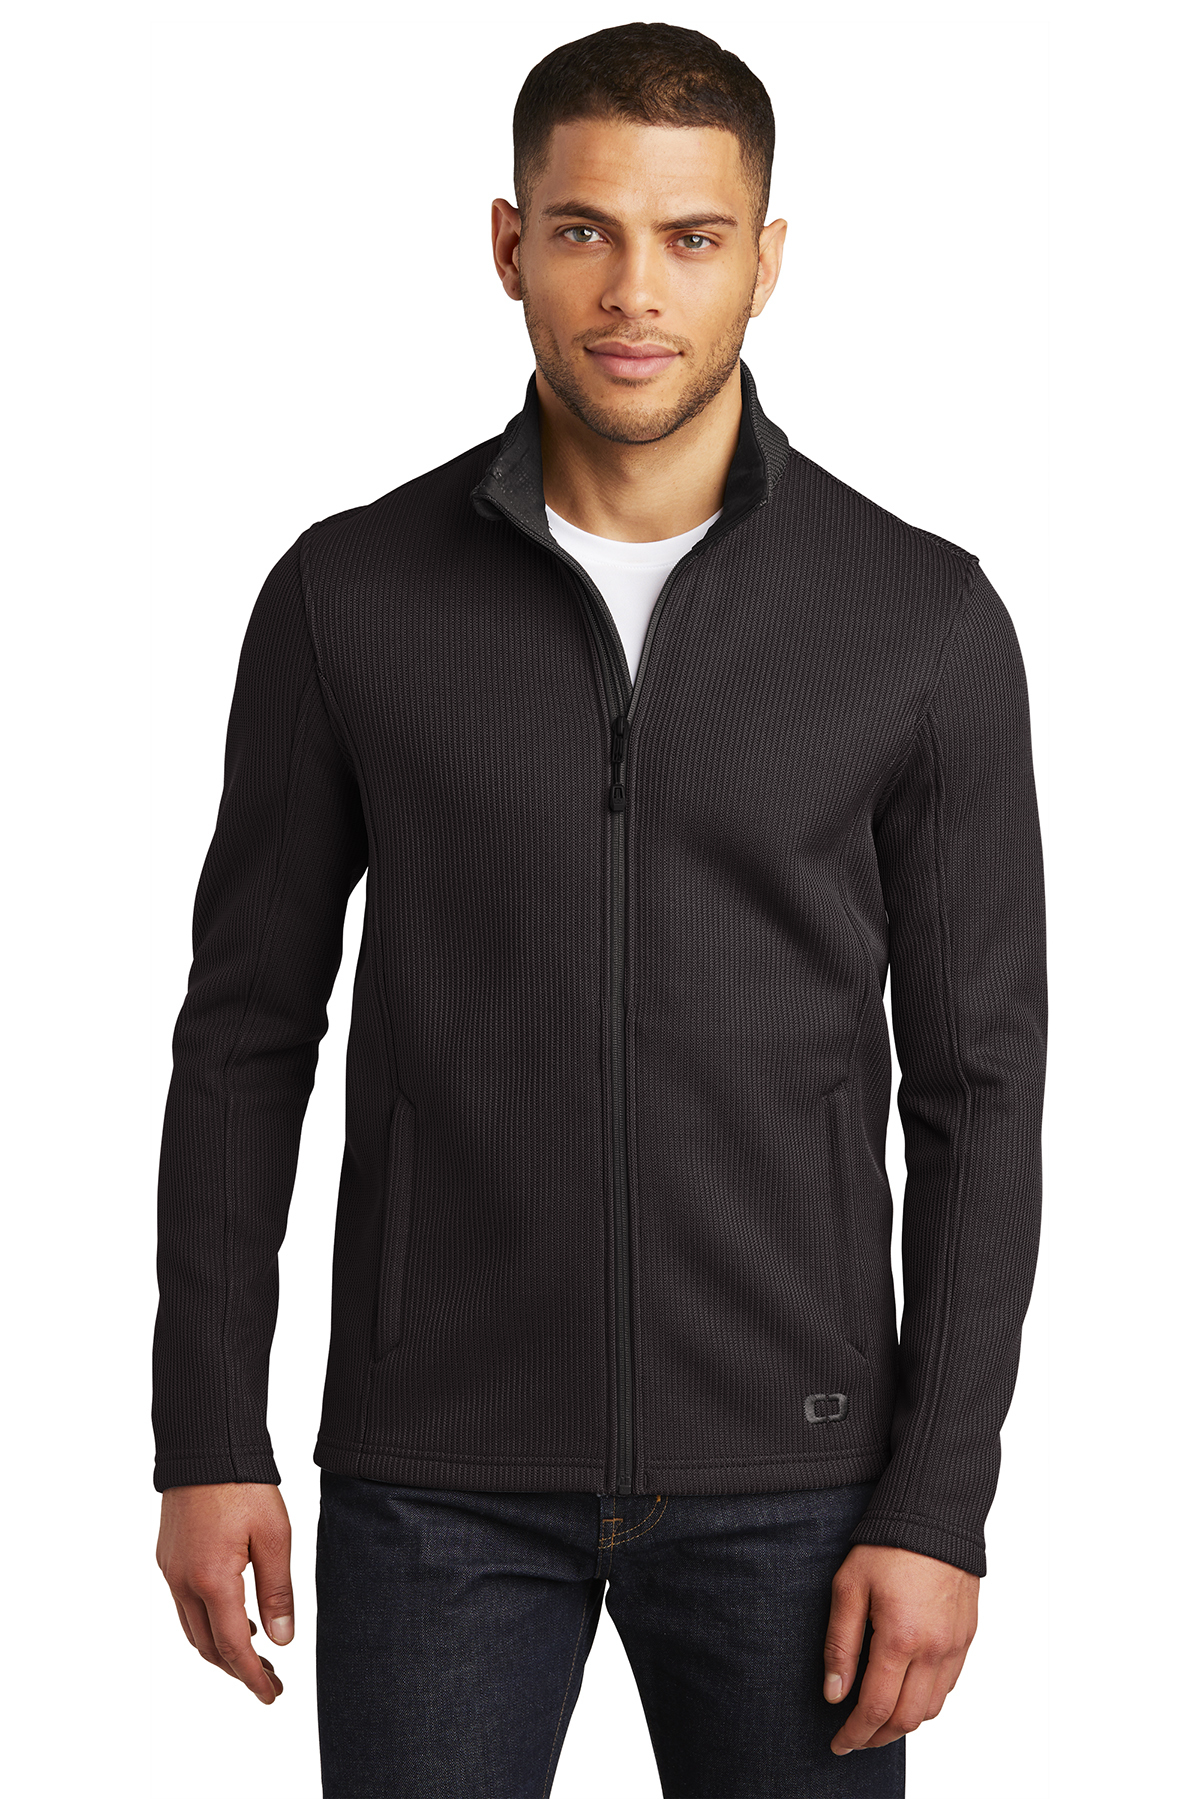 OGIO Grit Fleece Jacket | Product | Online Apparel Market